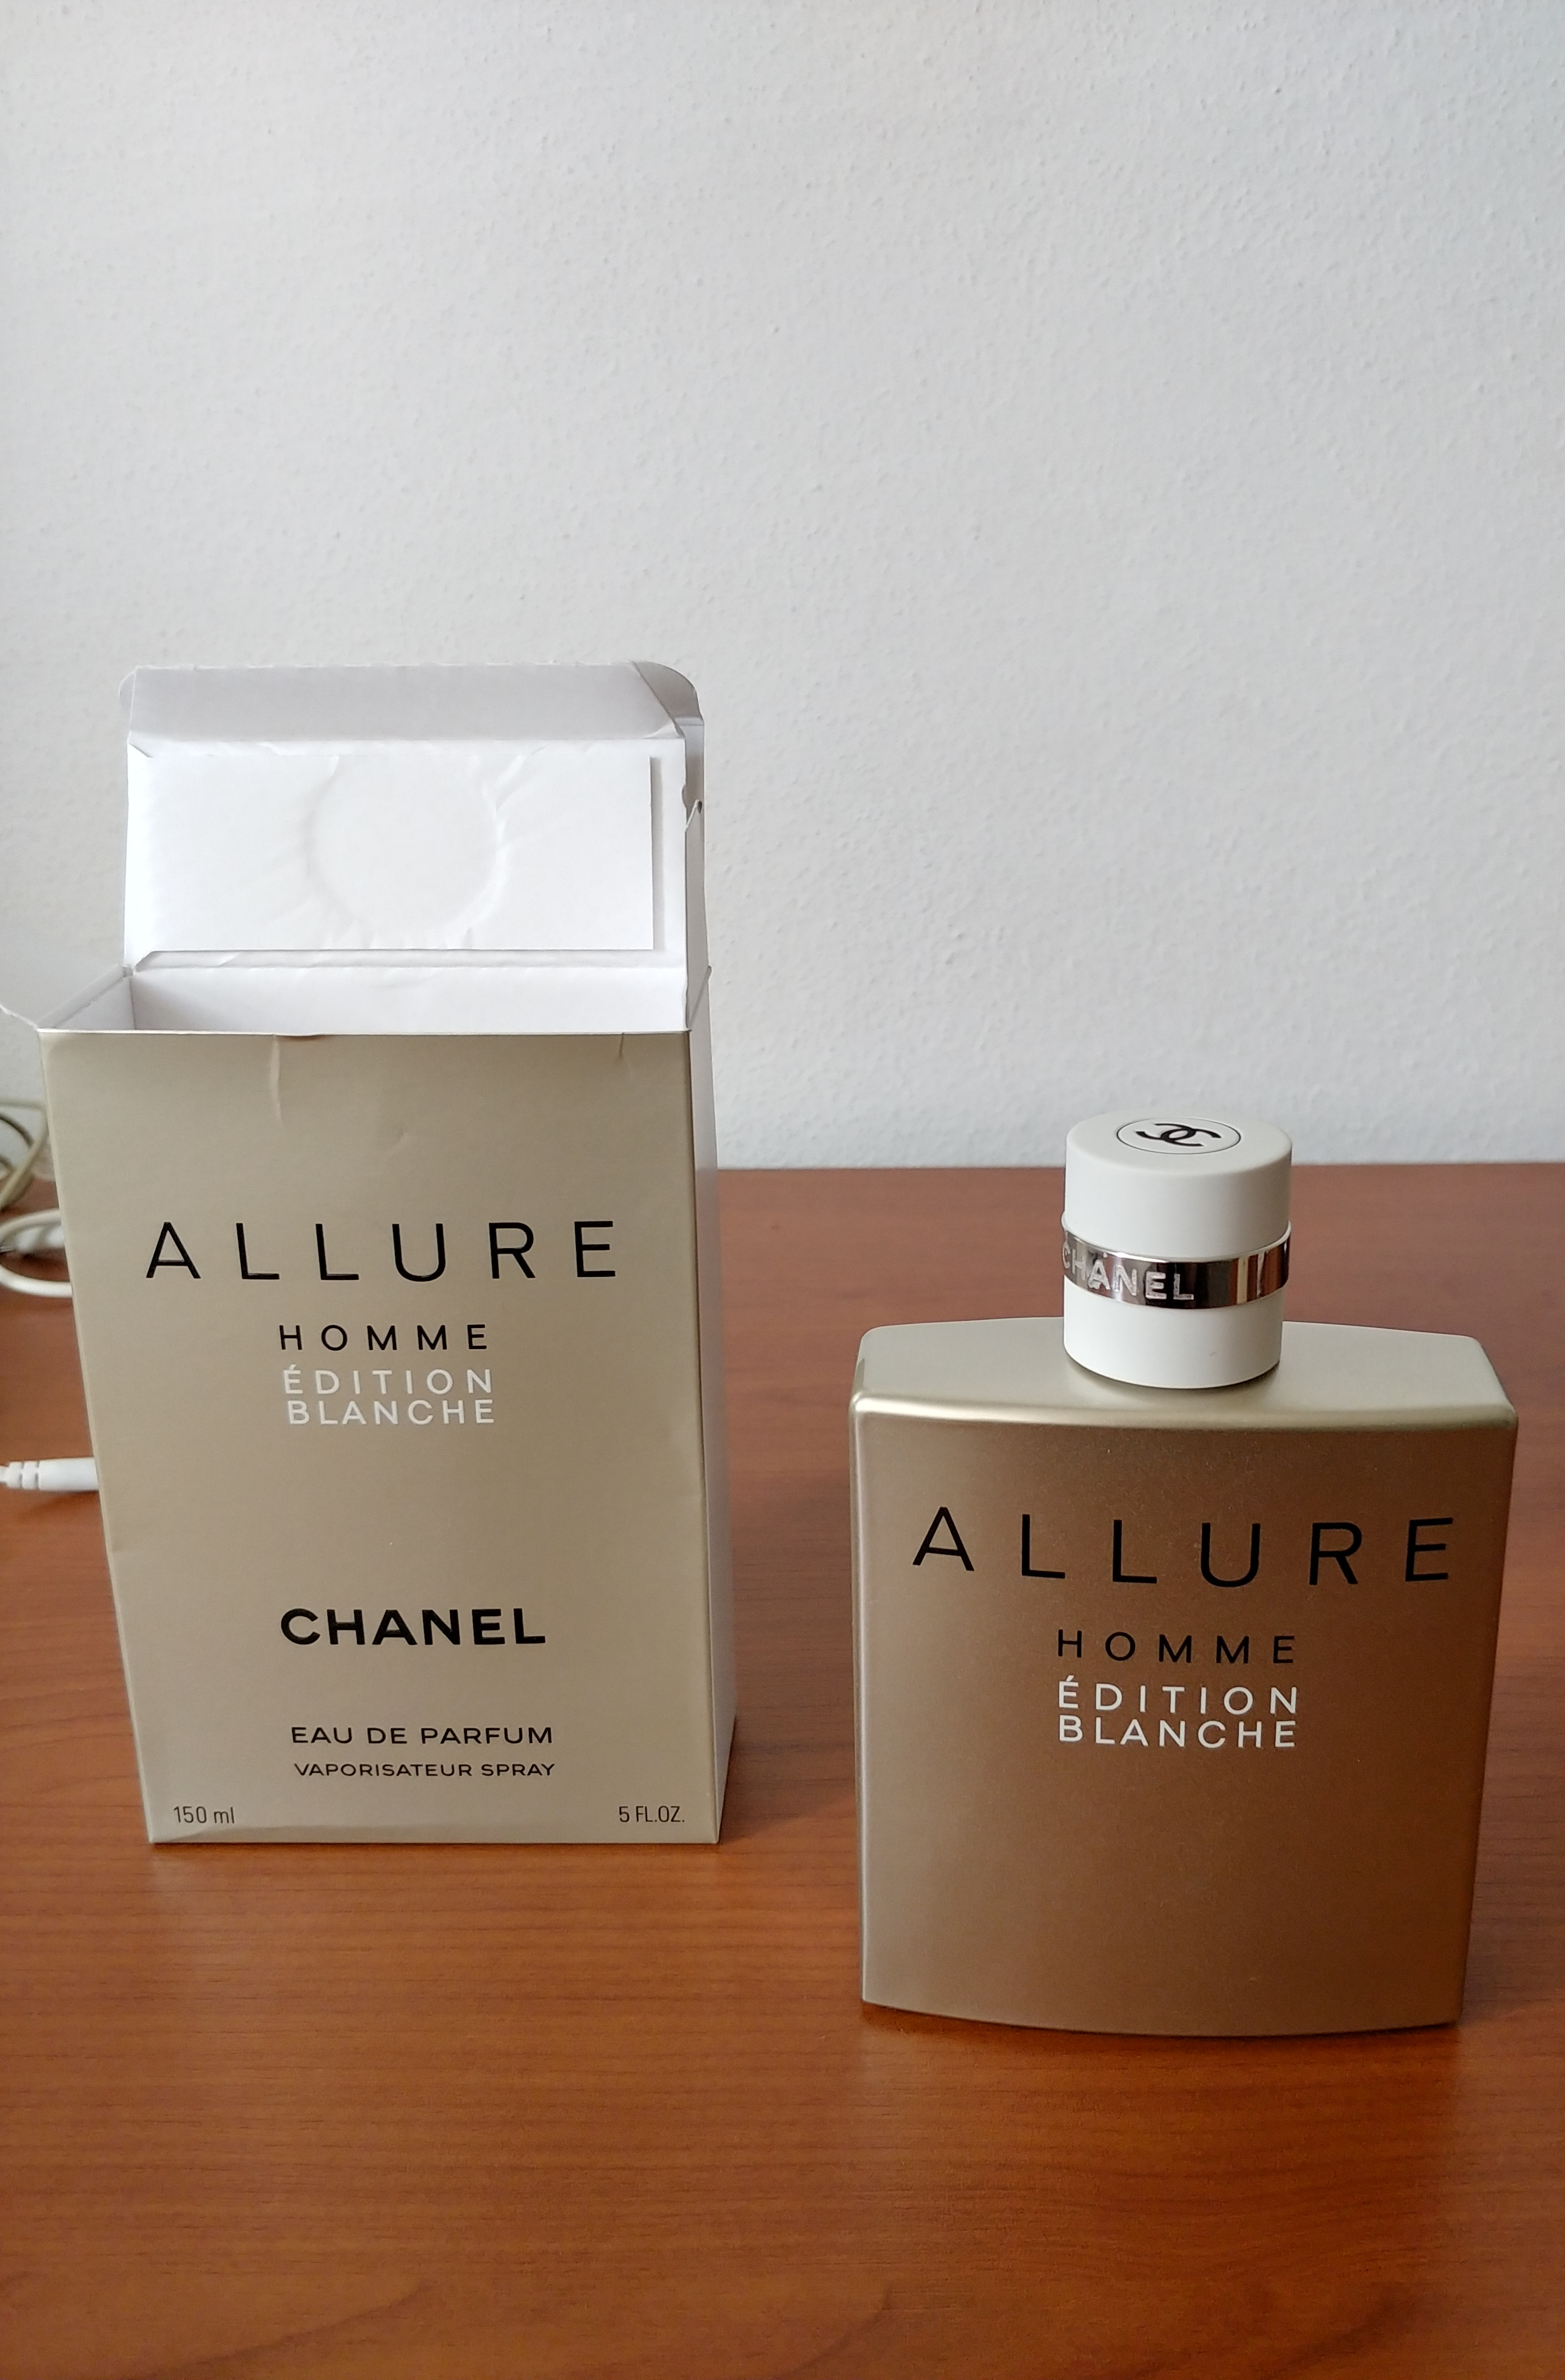 Chanel homme blanche. Шанель Аллюр эдишн Бланш. Chanel Allure Edition Blanche. Chanel Allure homme Edition Blanche. Chanel Allure homme Sport Edition Blanche.